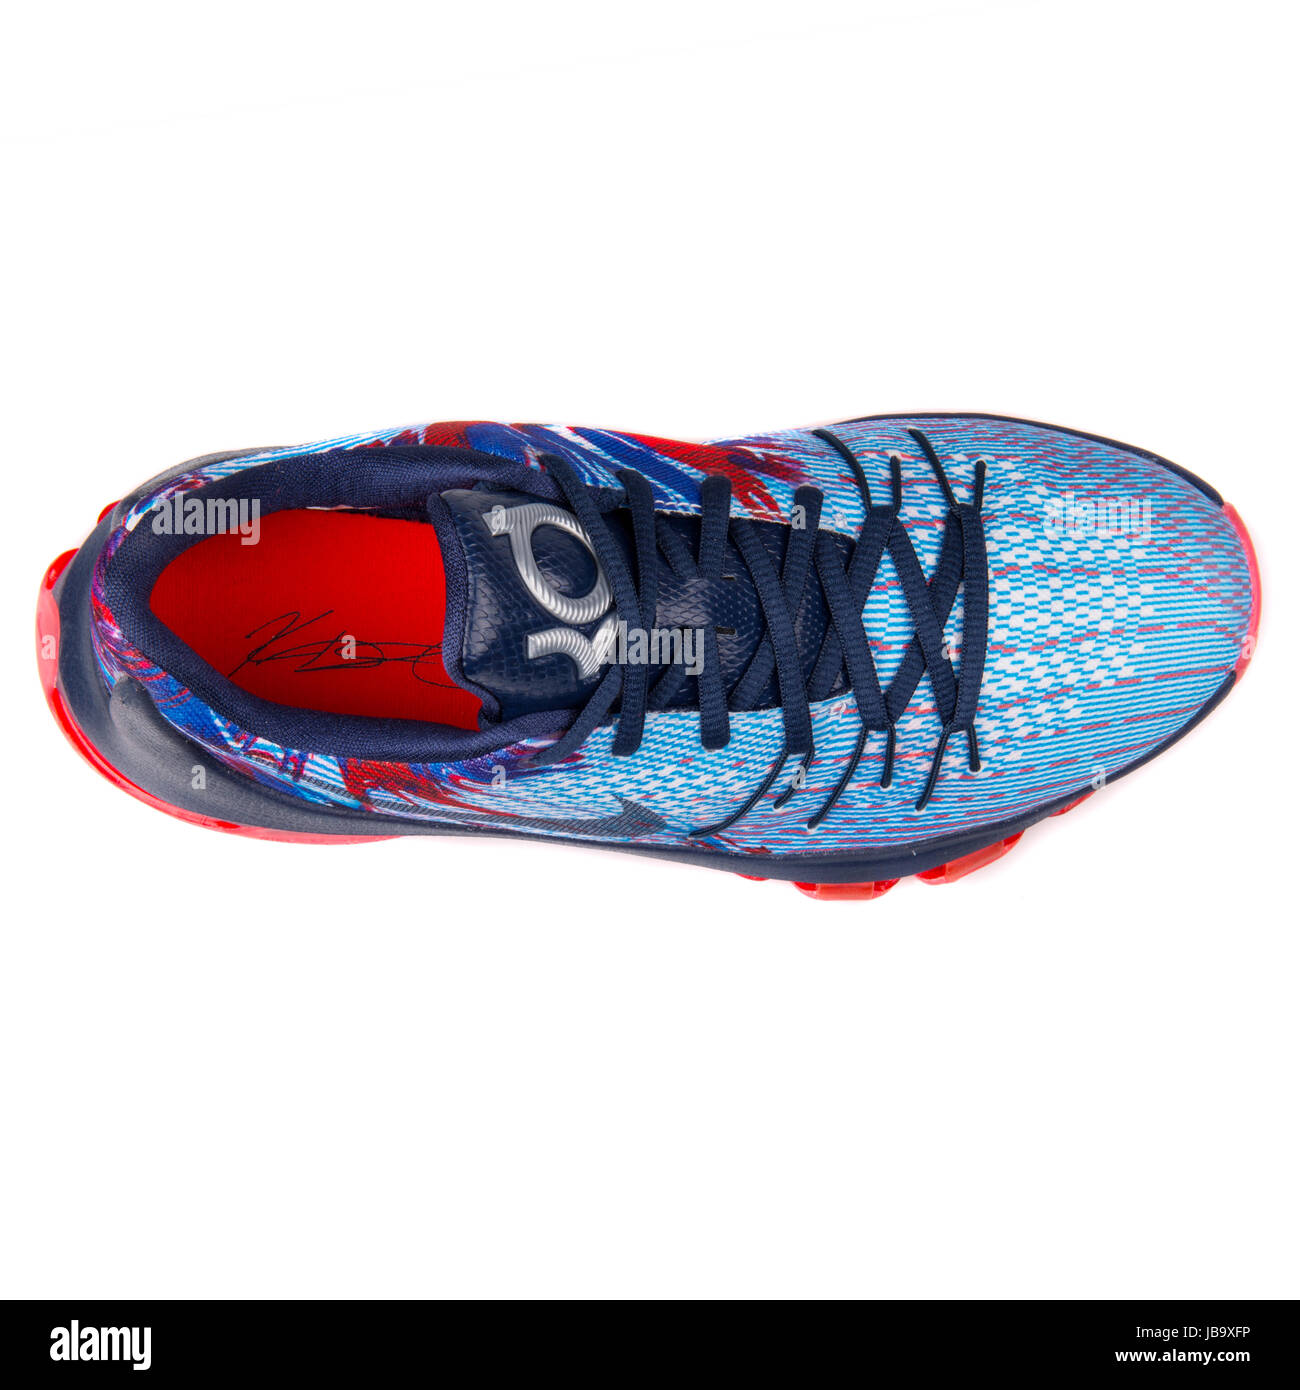 Nike KD 8 (GS) Marine hellblau, blau und rot Jugend Basketball Shoes -  768867-446 Stockfotografie - Alamy